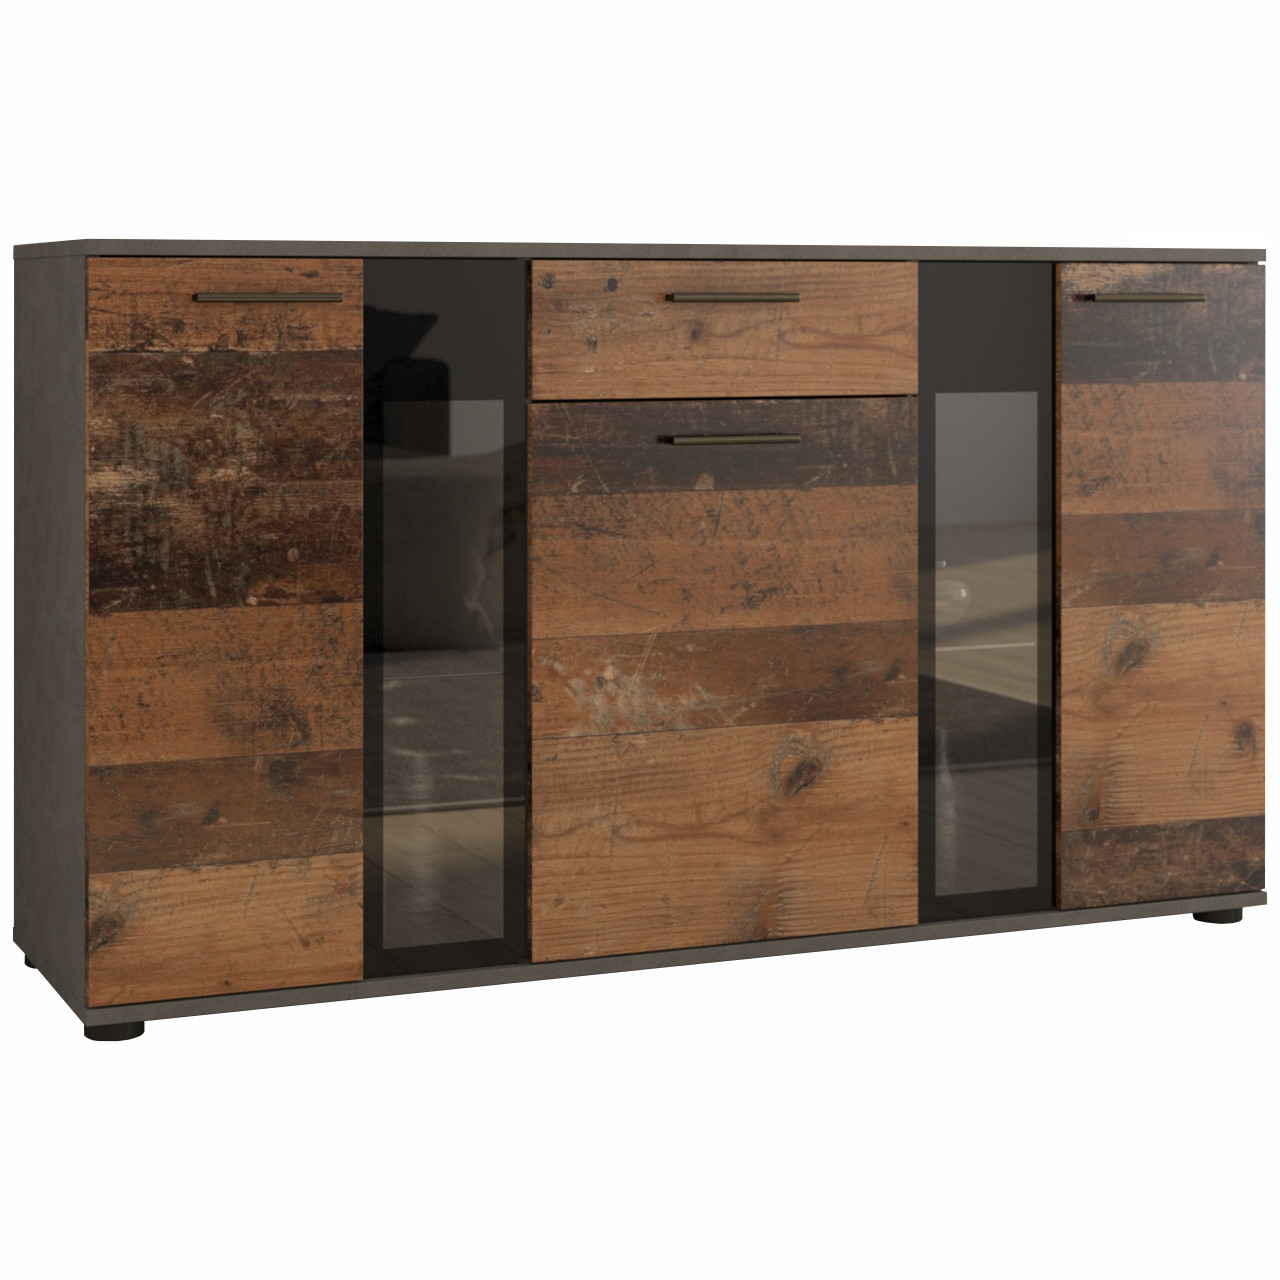 Storage cabinet SALSA / TANGO matera / old style